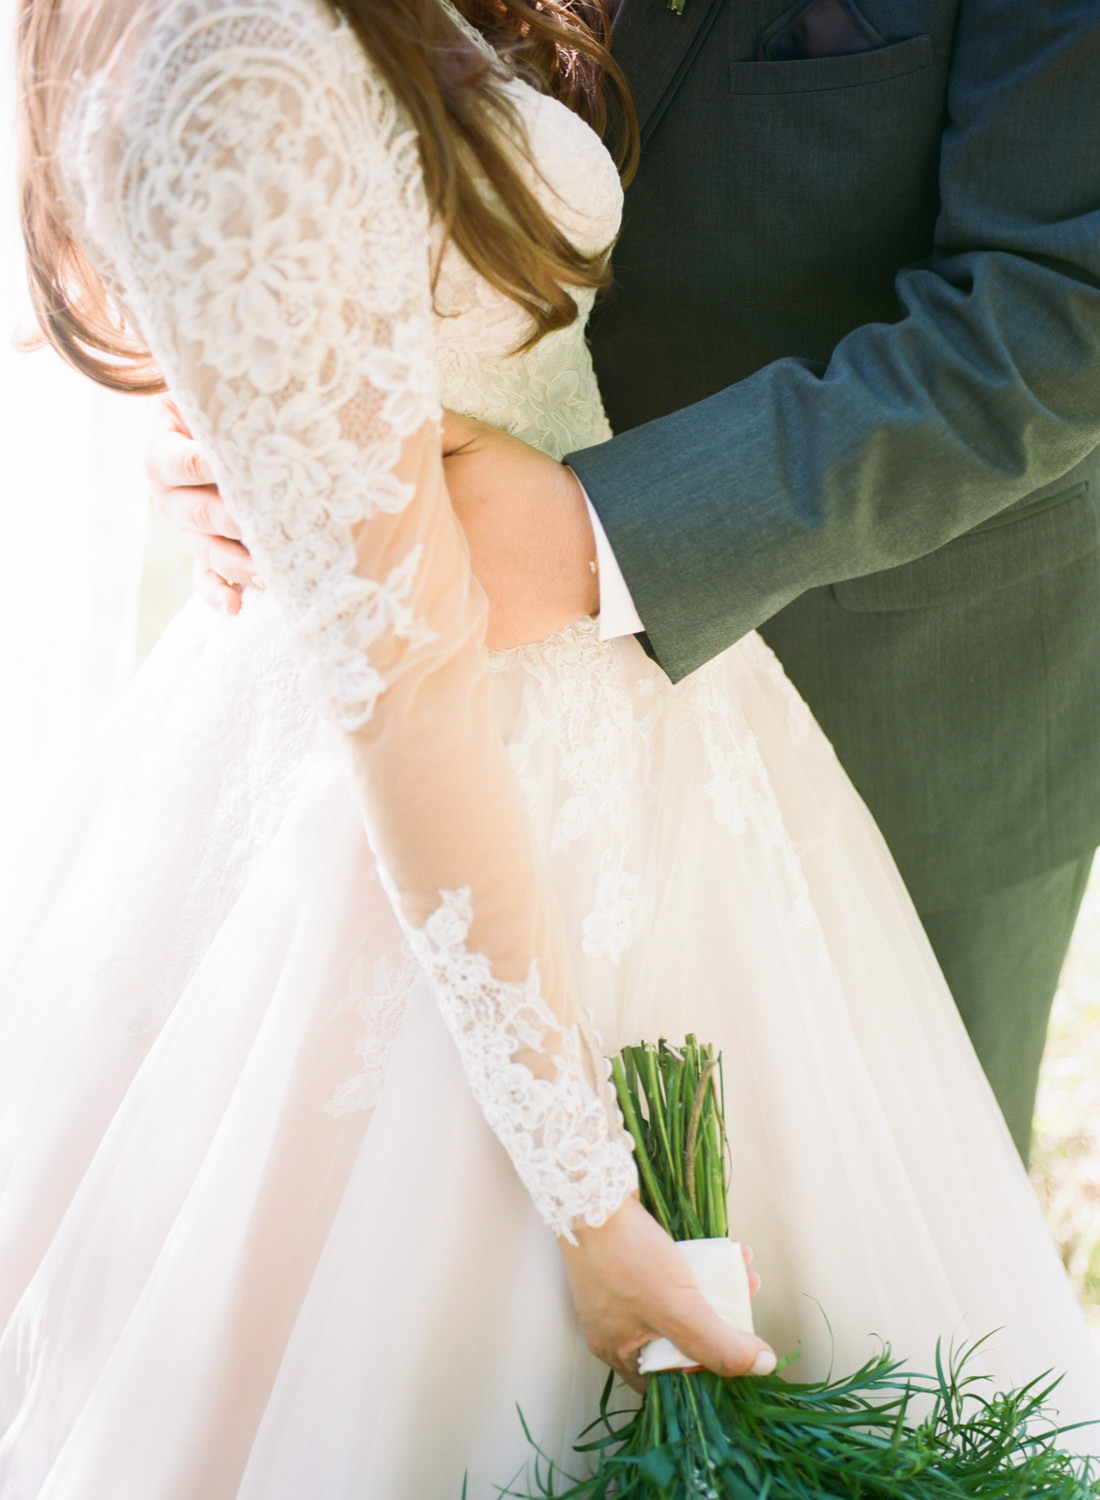 Groom's arms around bride; St. Louis fine art film wedding photographer Erica Robnett Photography